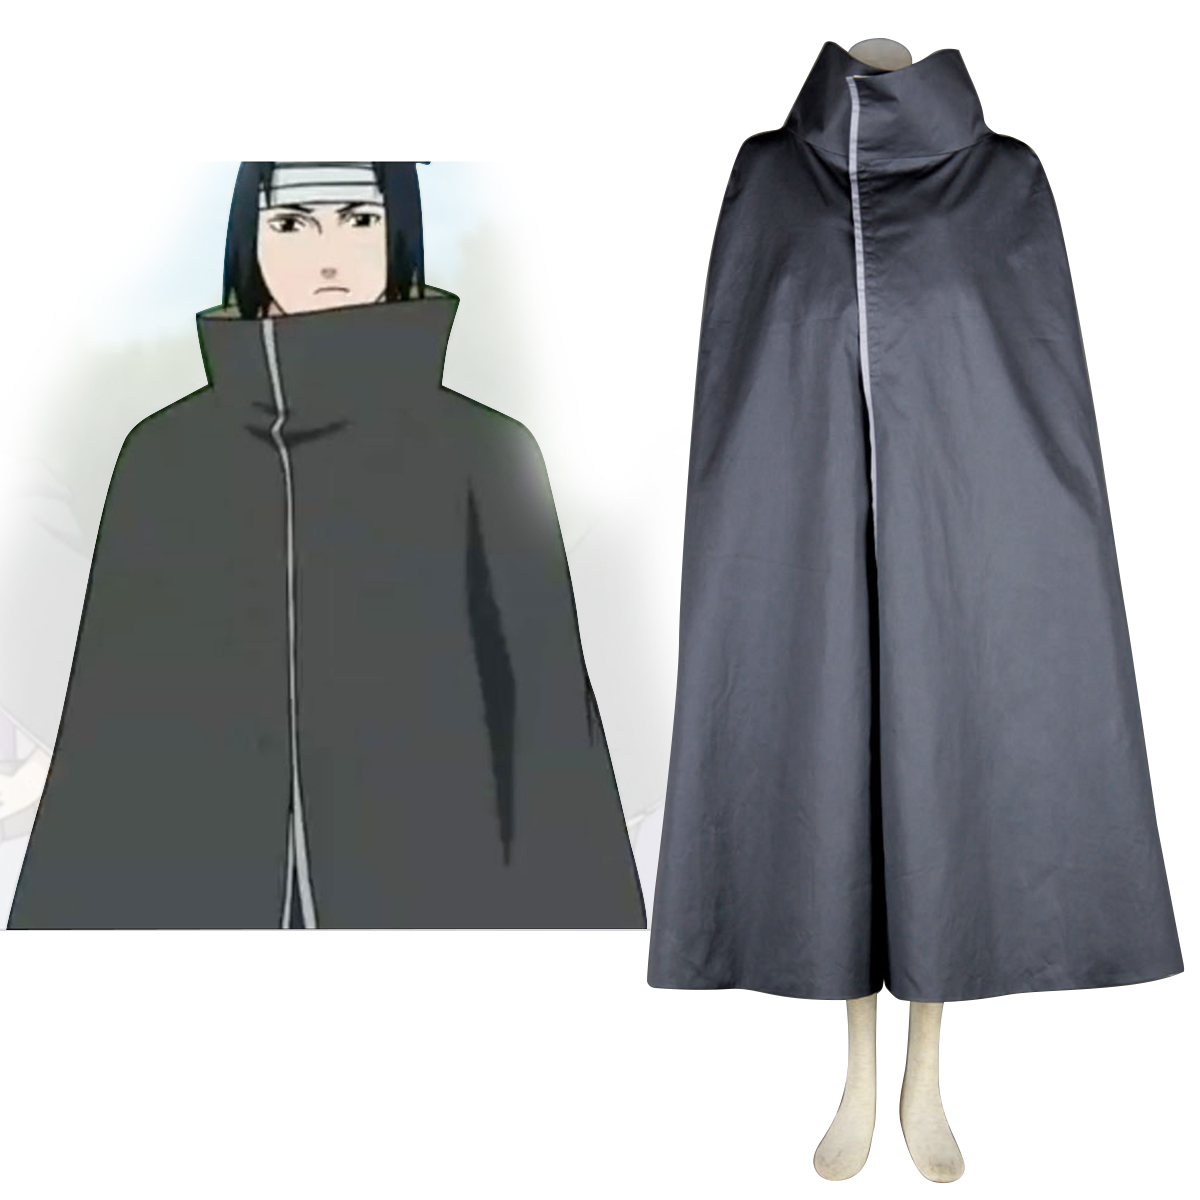 Naruto Uchiha Sasuke 5 Anime Cosplay Costumes Outfit